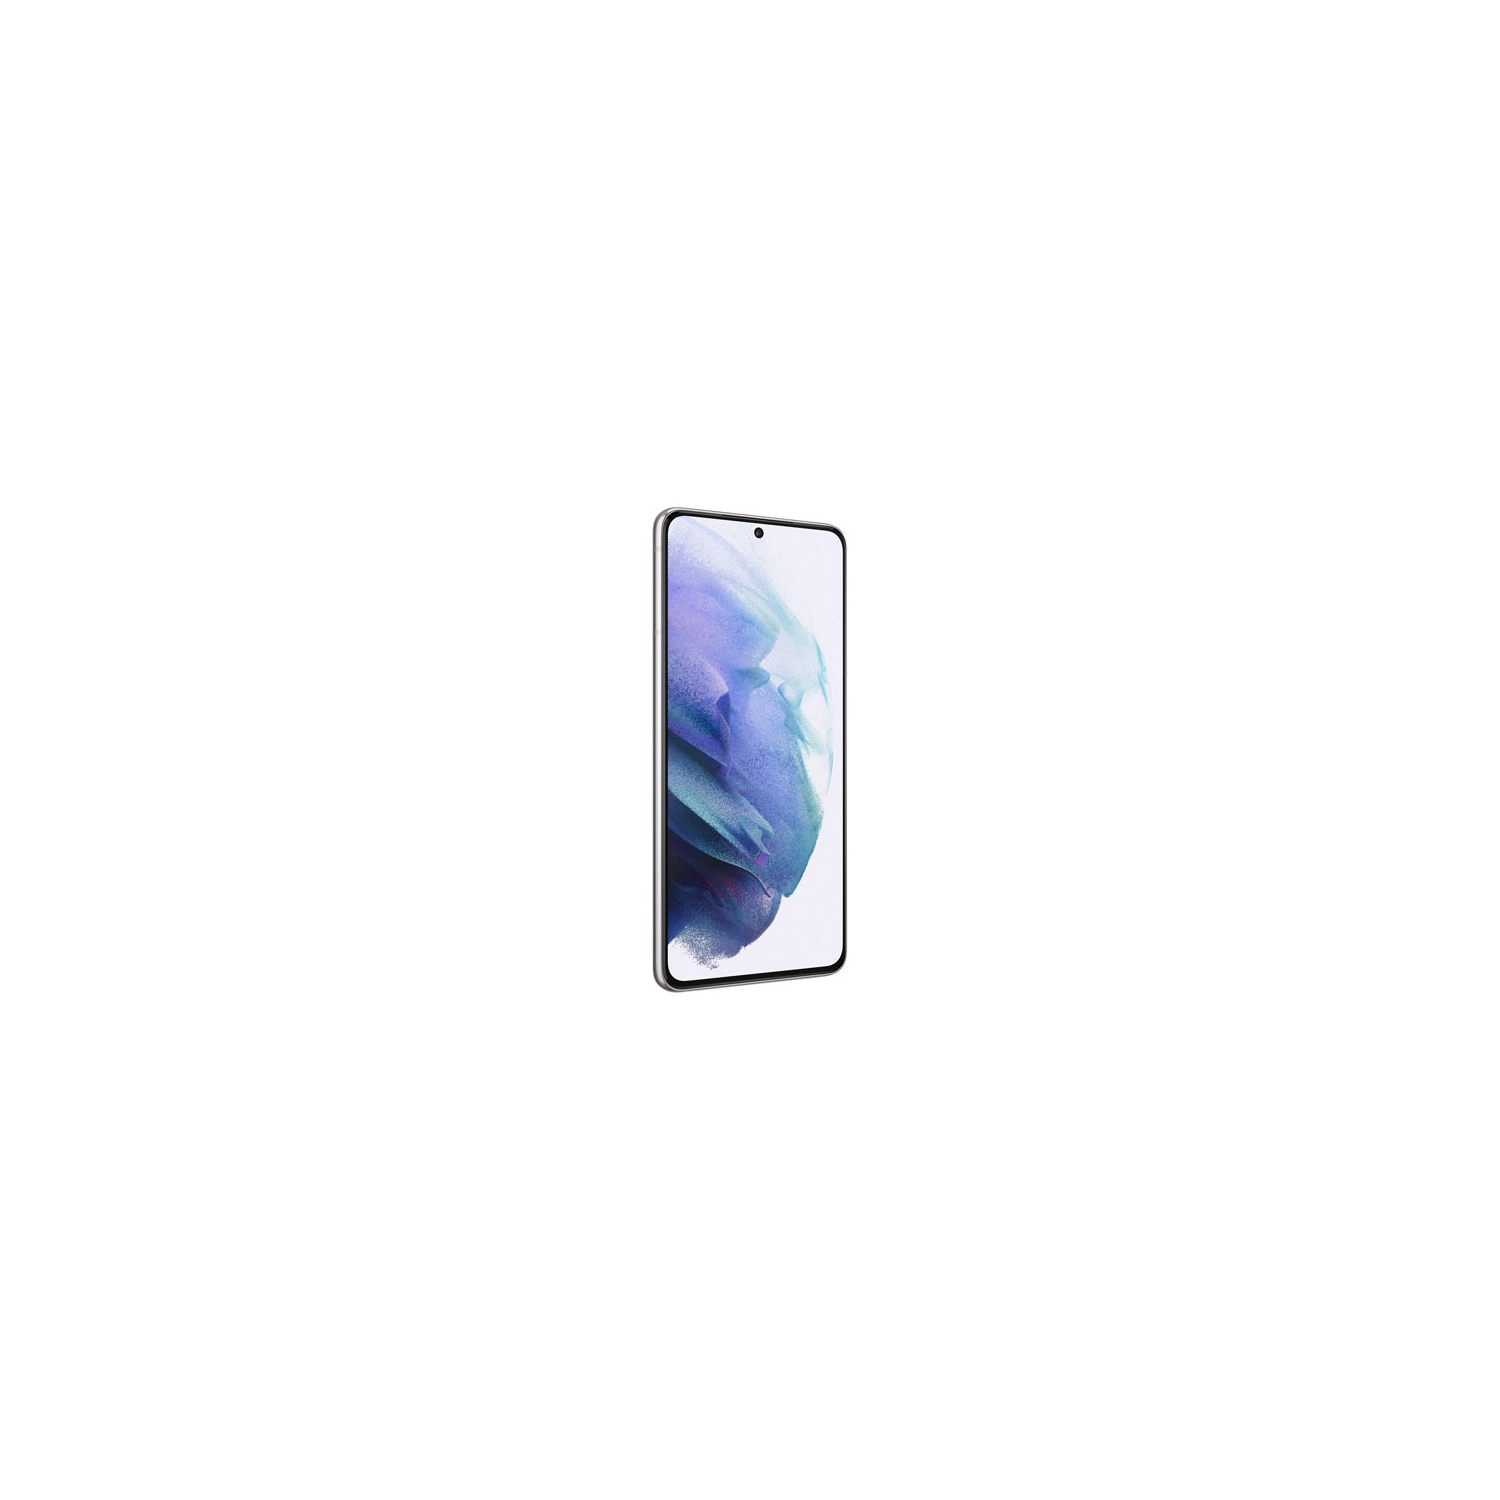 Refurbished (Excellent) - Samsung Galaxy S21 128GB Smartphone - Phantom White - Unlocked - Certified Refurbished